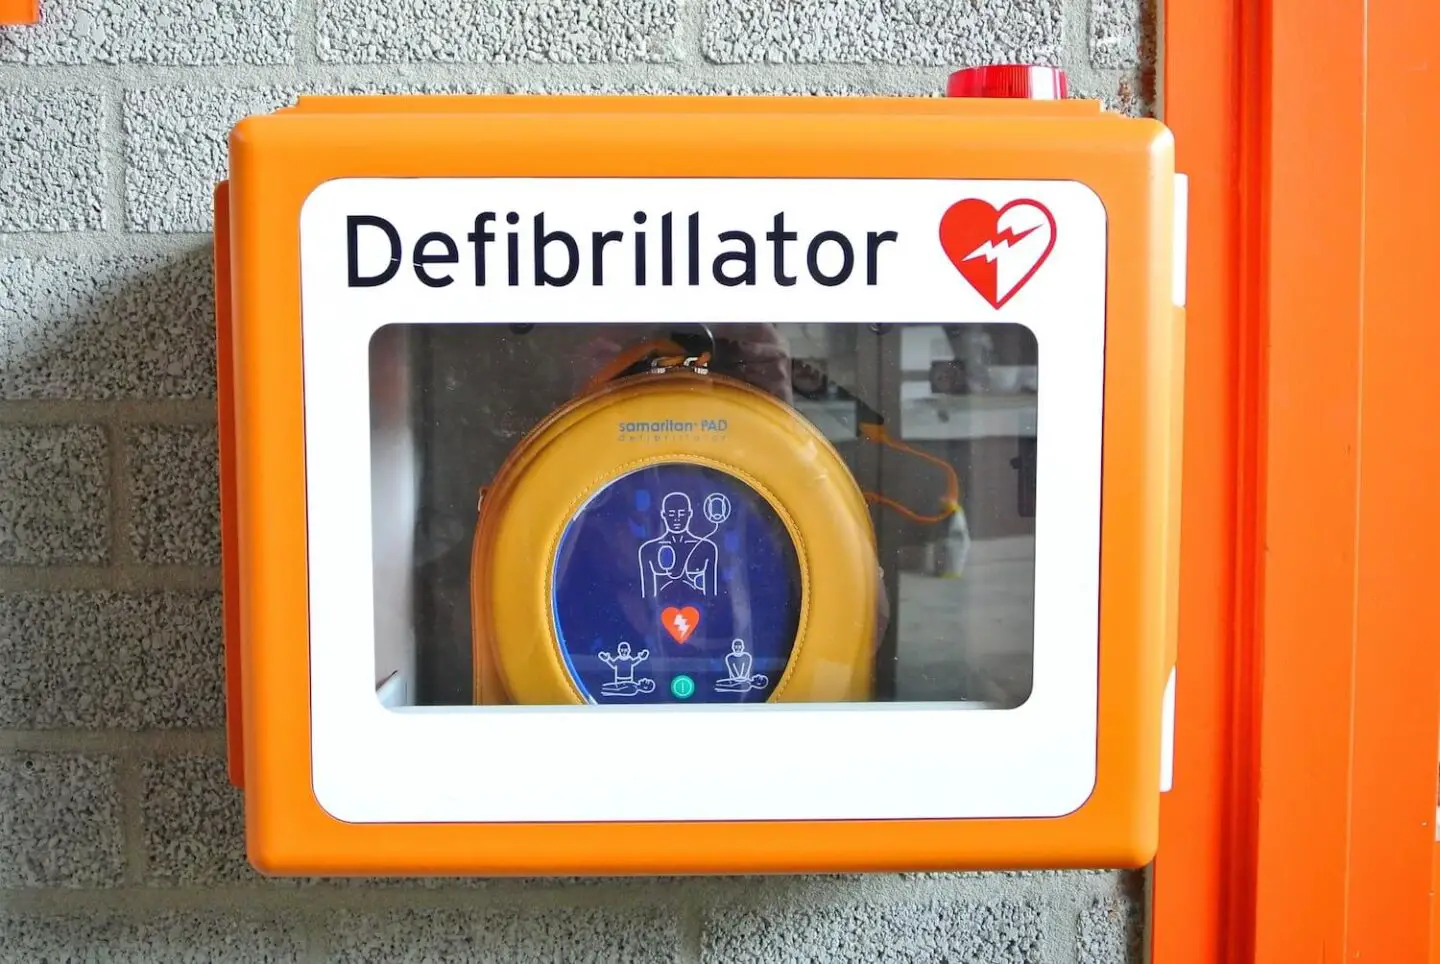 a defibrillator in an orange box